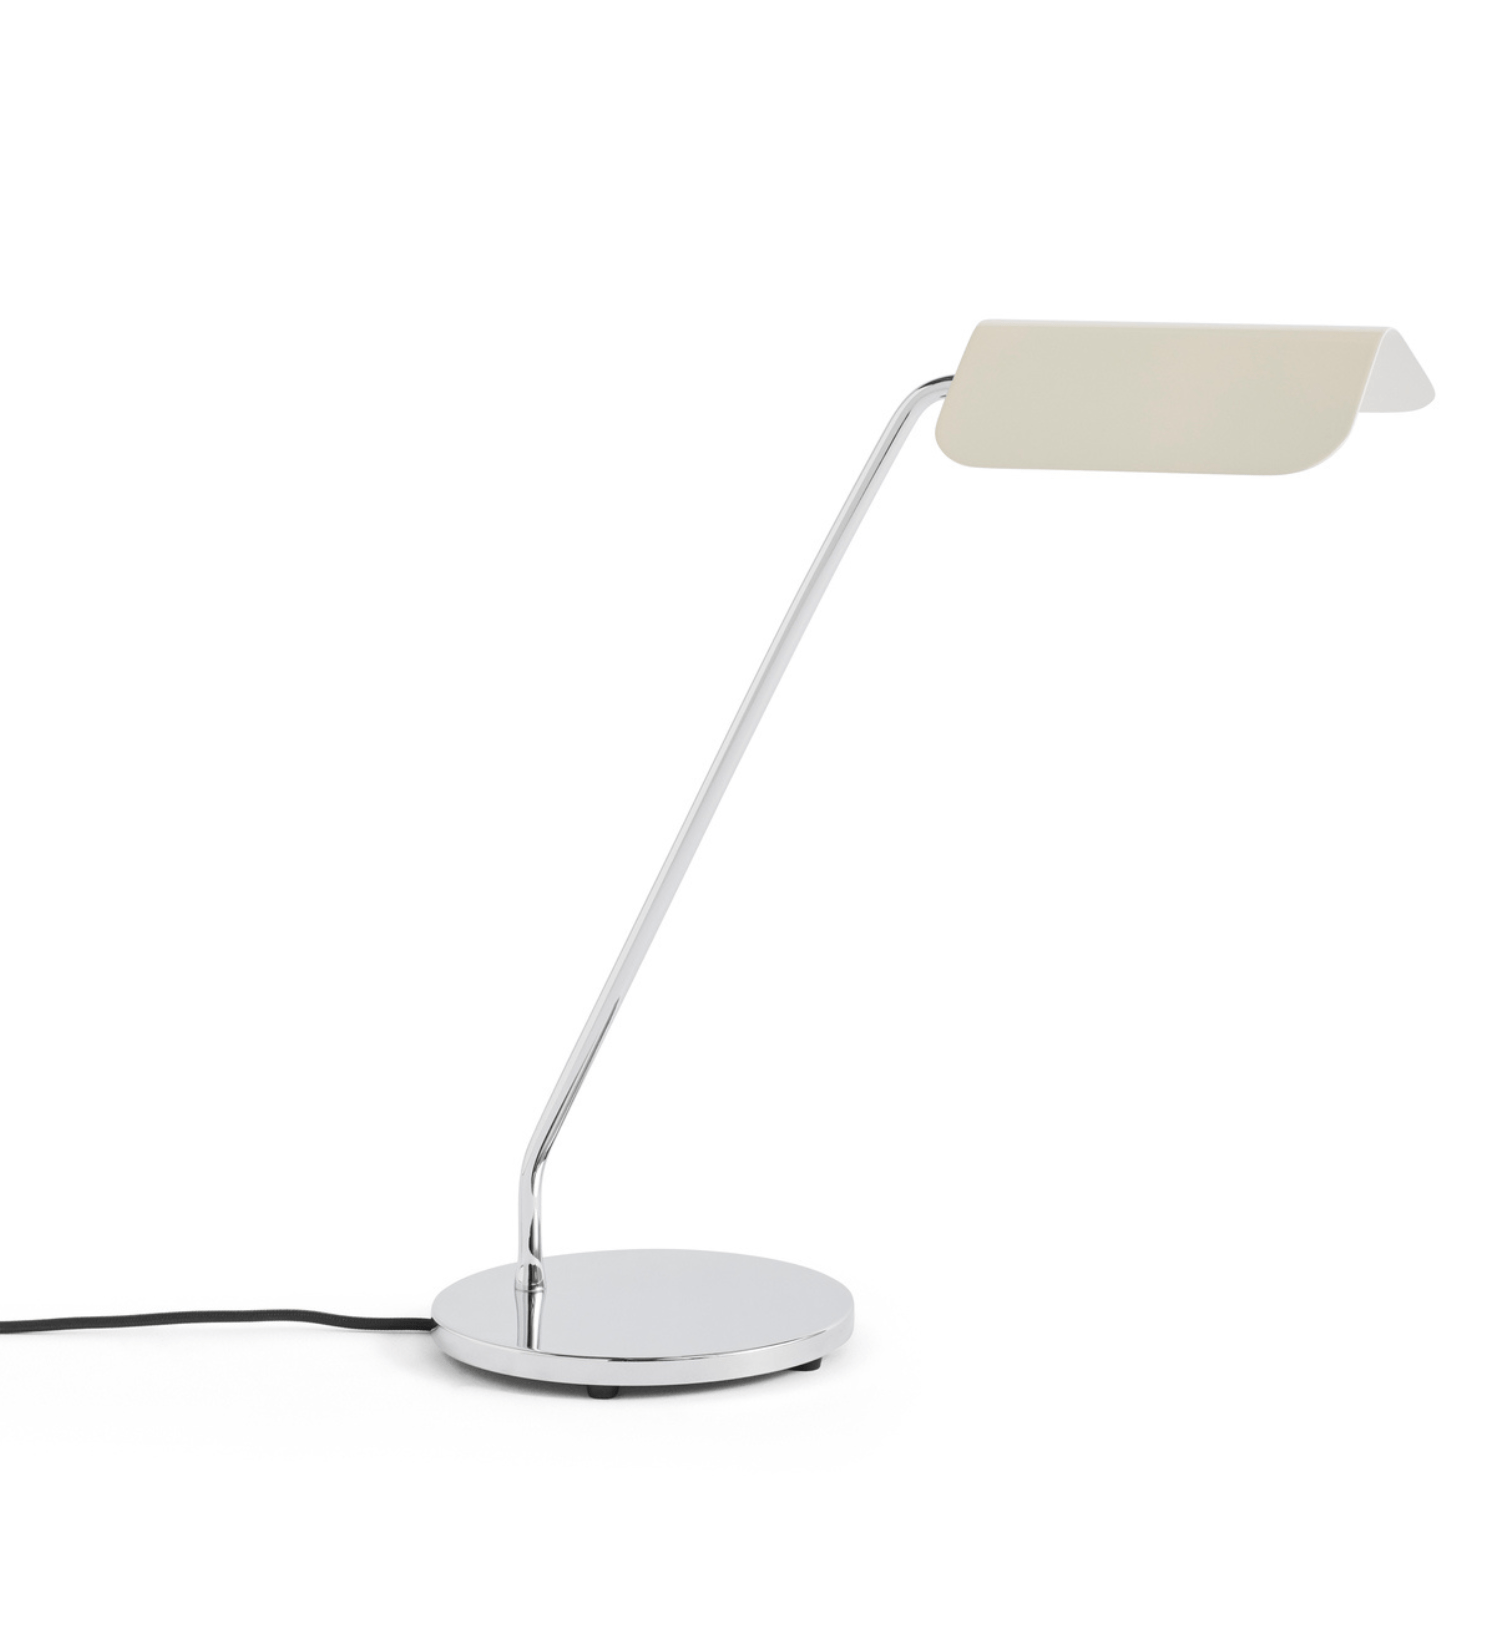 Lampa biurkowa Apex Desk Lamp marki Hay